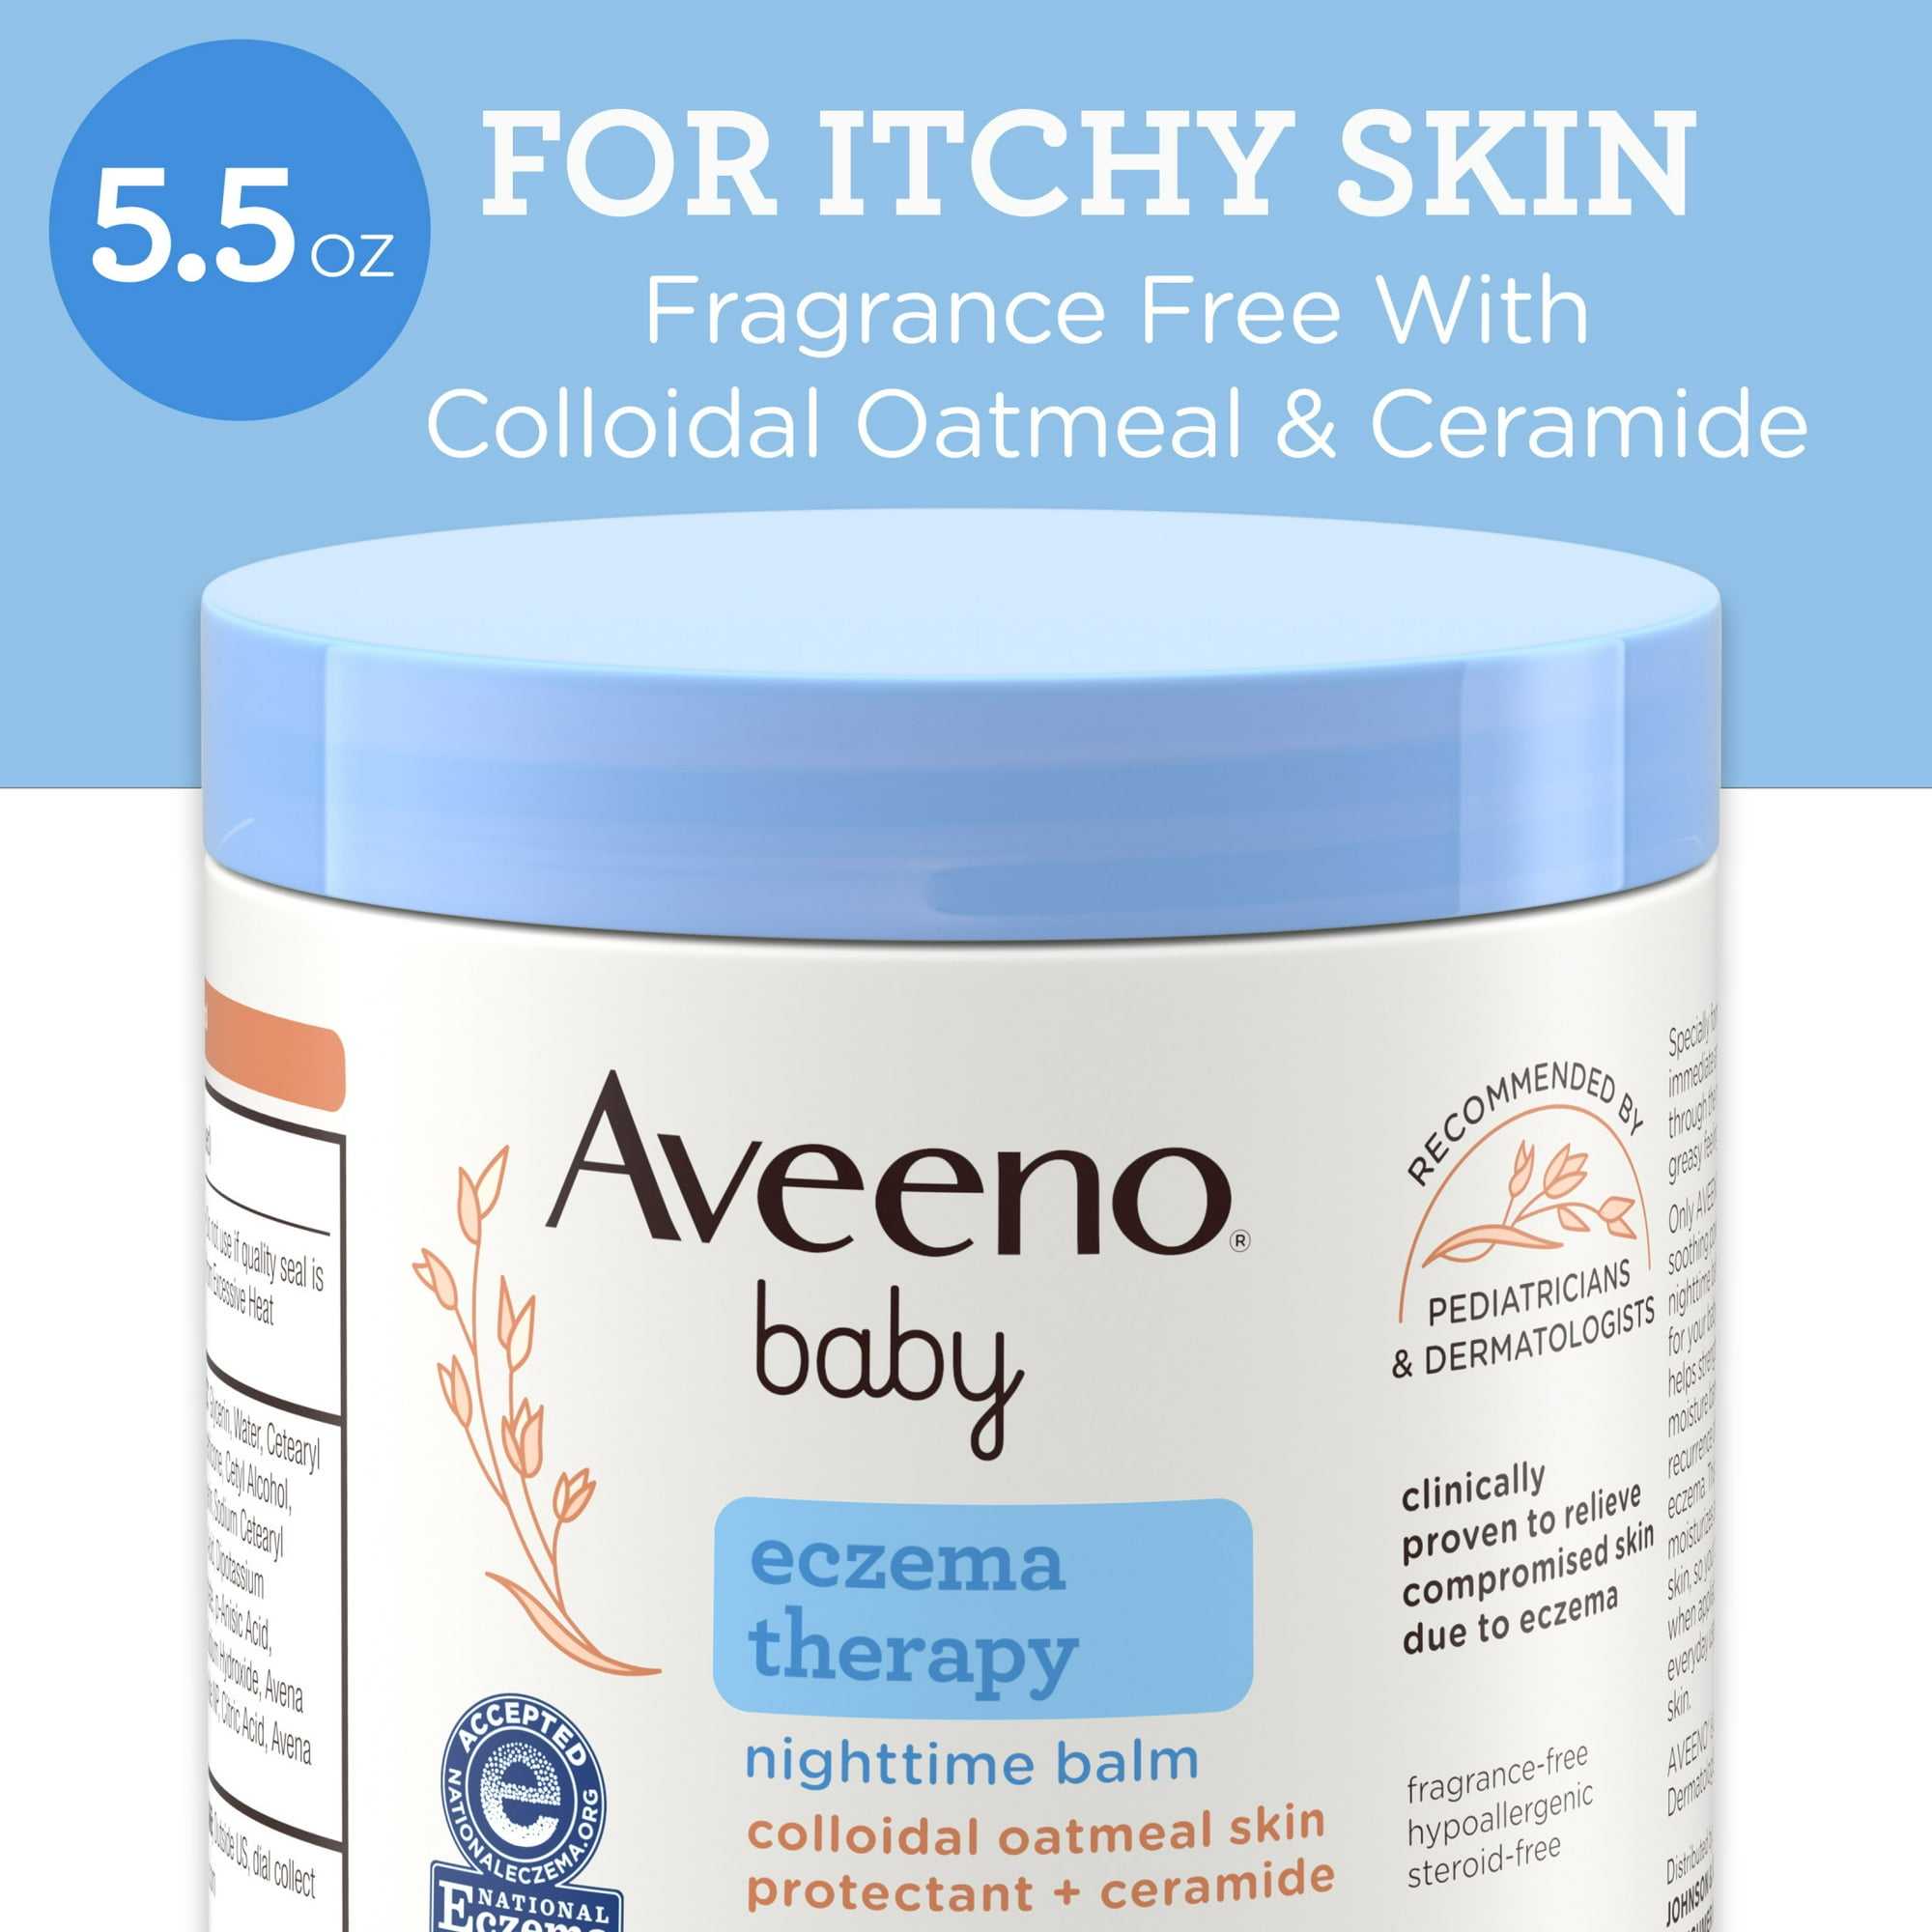 Aveeno Baby Eczema Therapy Nighttime Balm, Colloidal Oatmeal, 5.5 oz